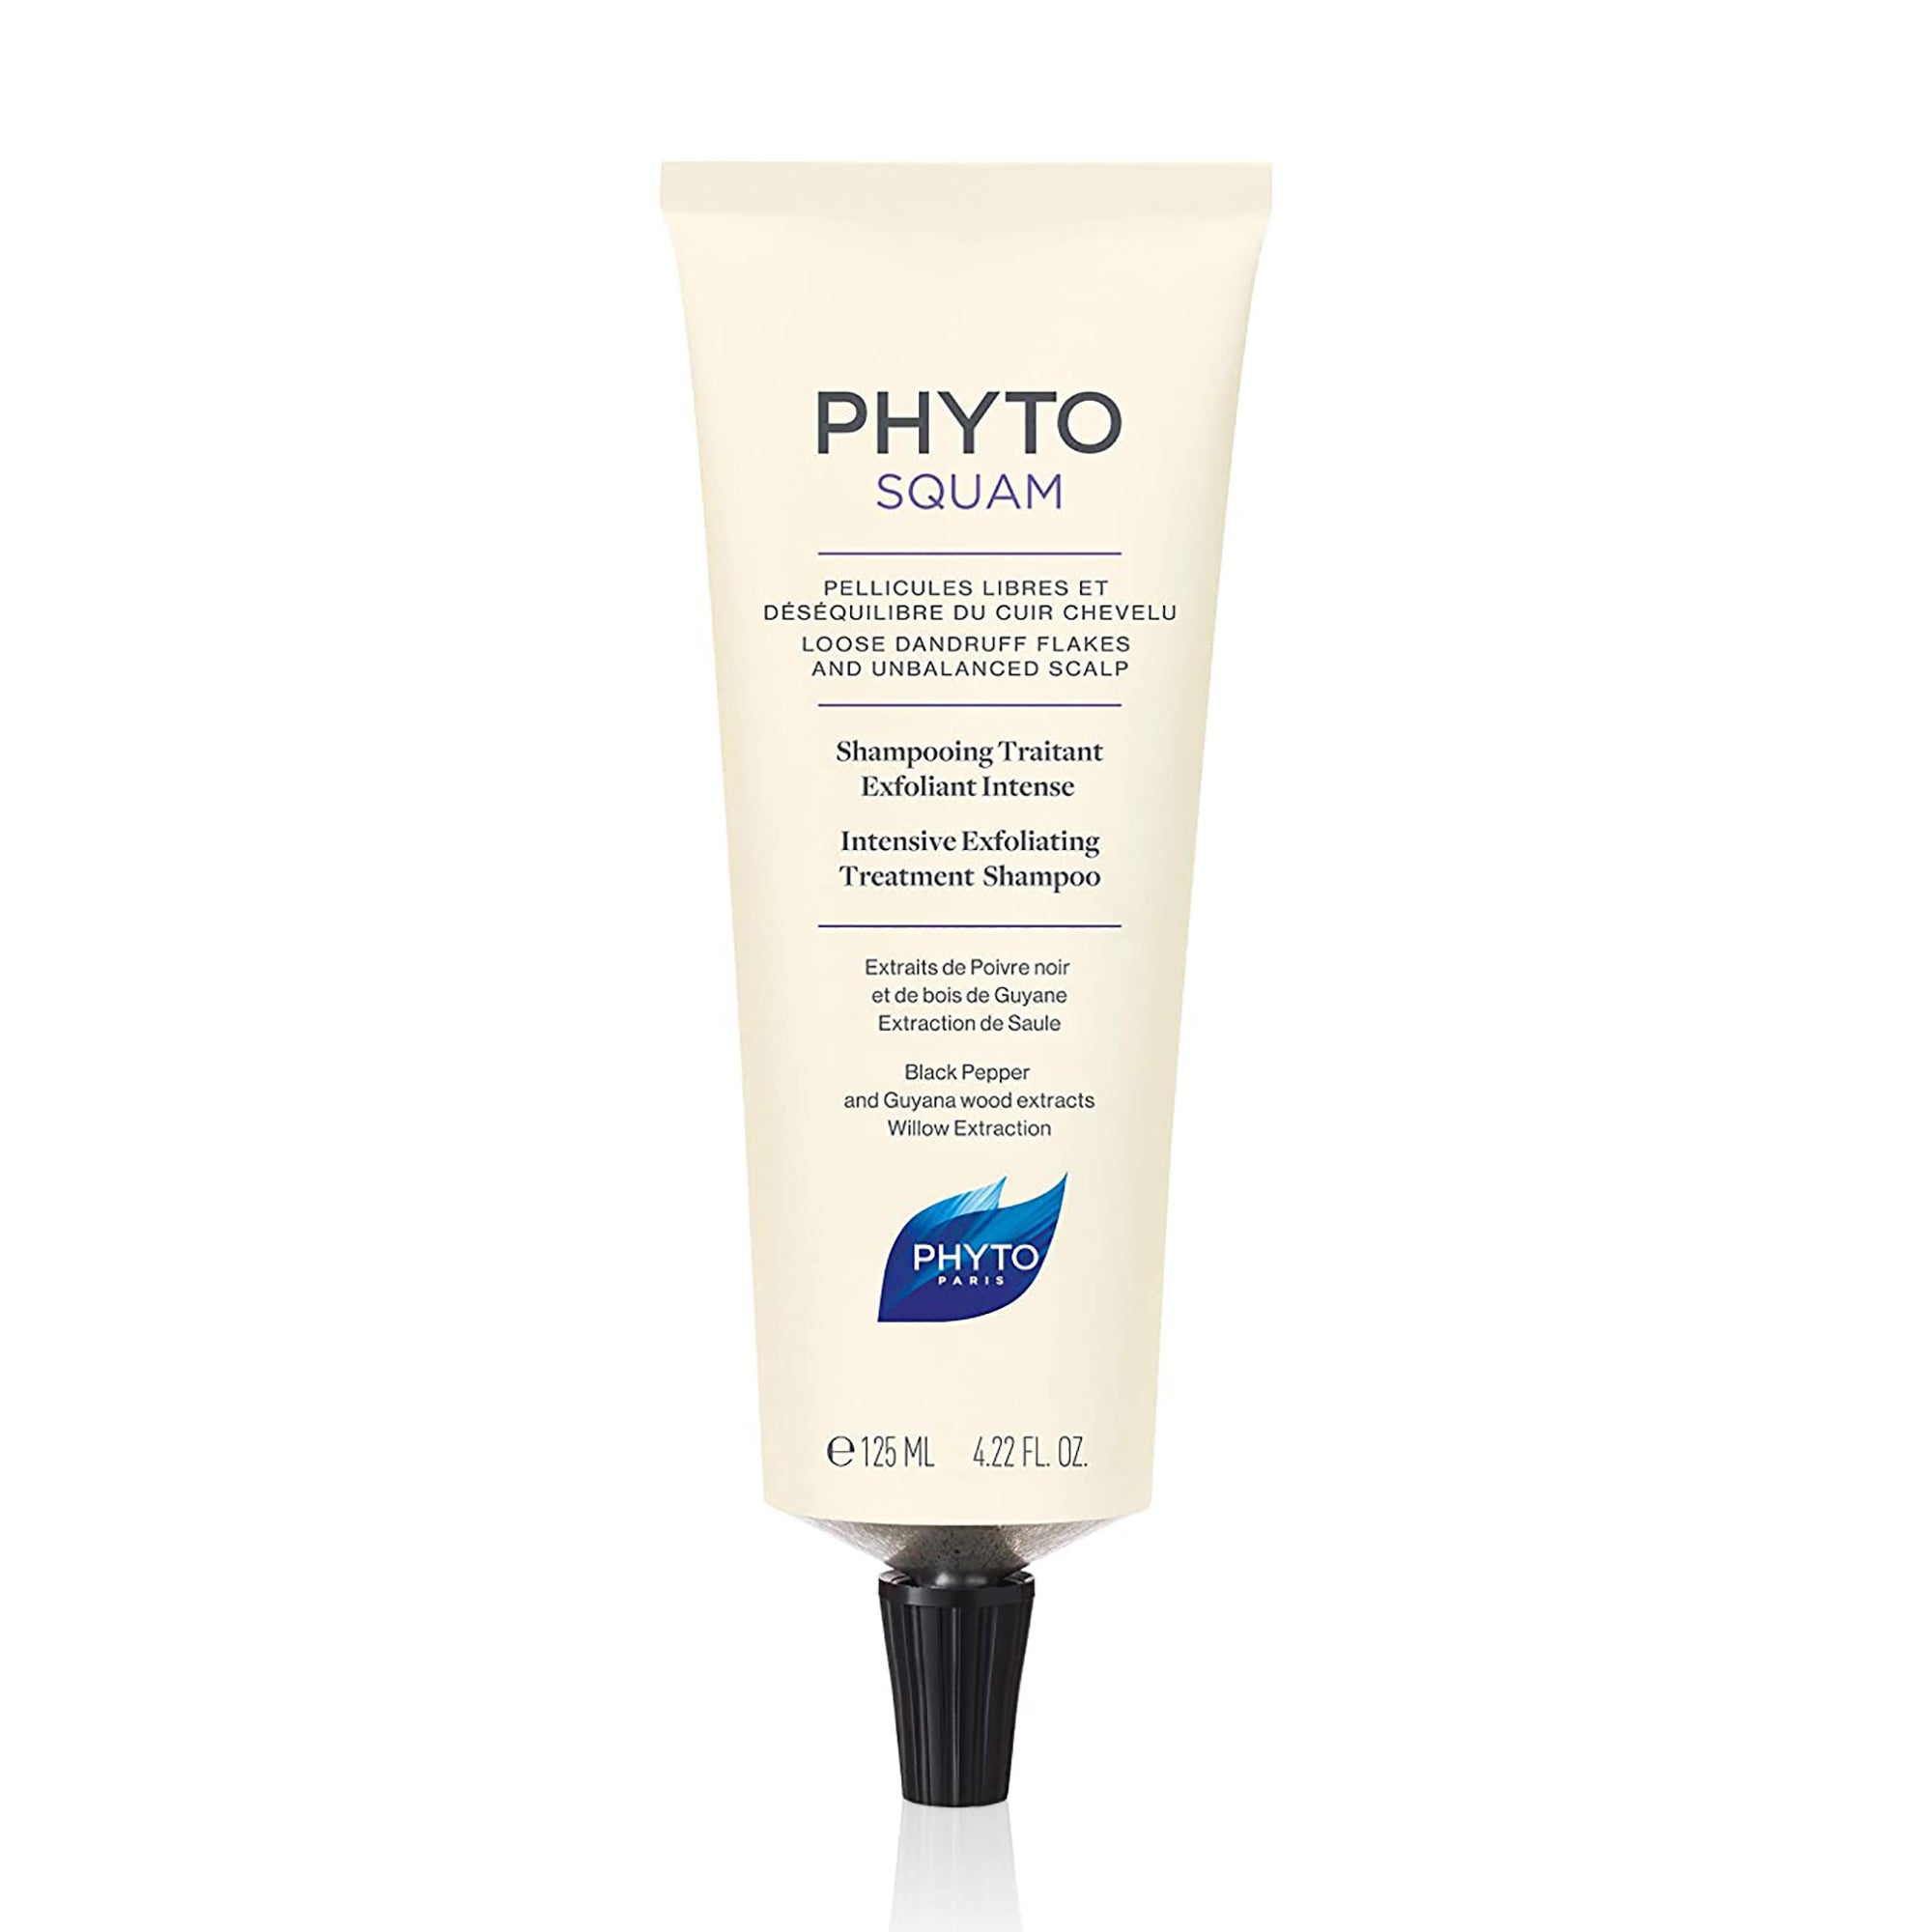 Phyto Phytosquam Intense Exfoliating Treatment Shampoo / 4.22OZ